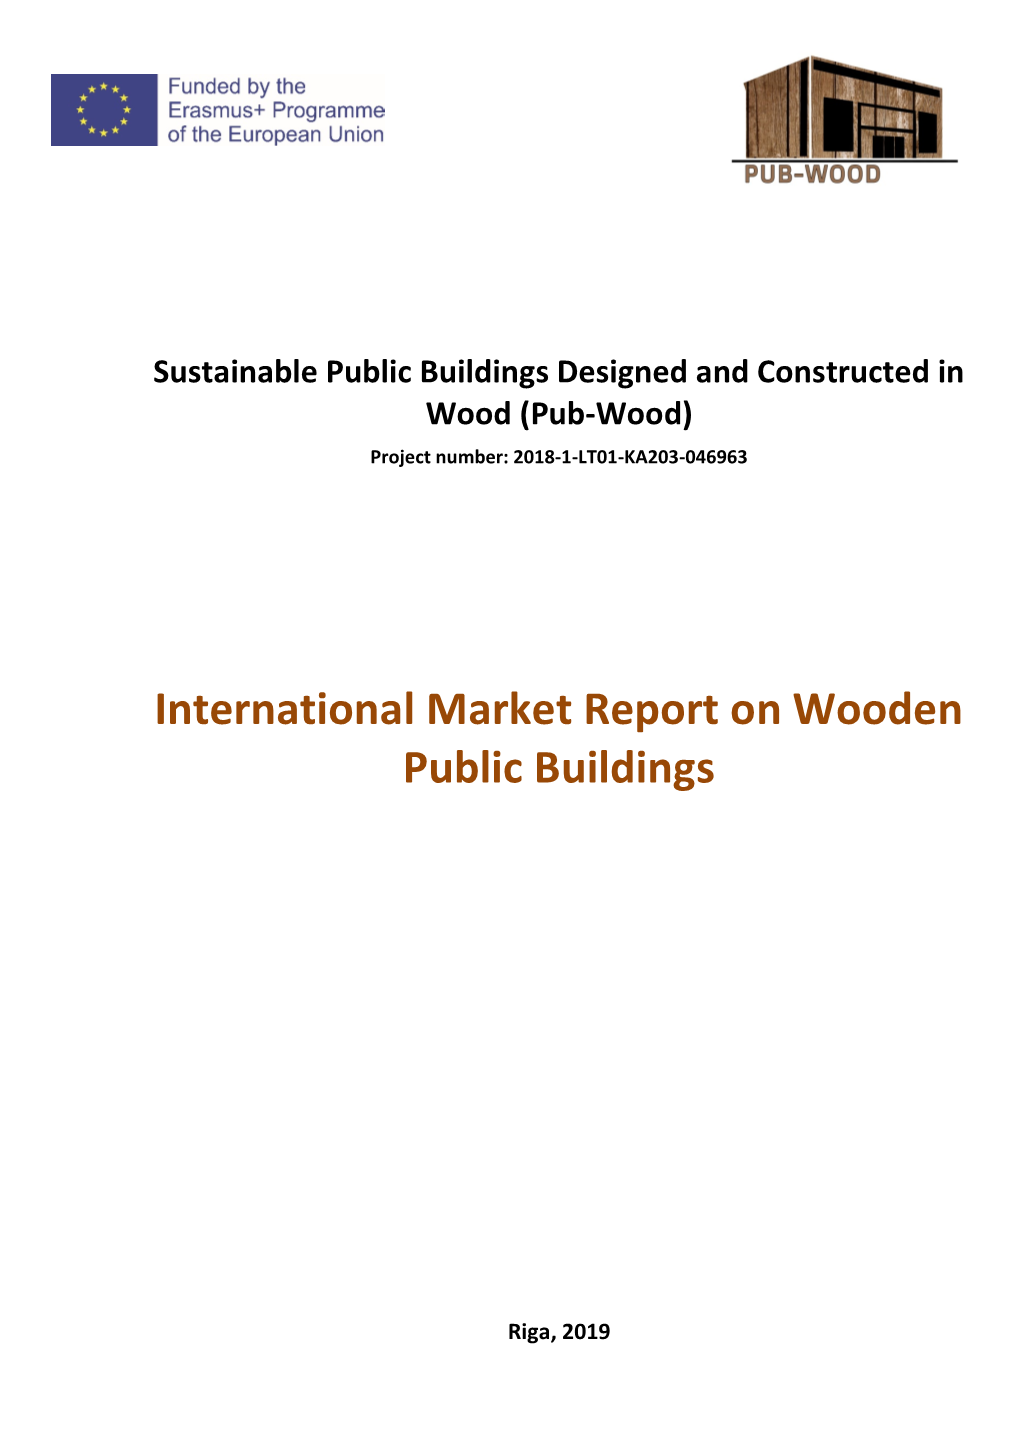 International Market Report on Wooden Public Buildings